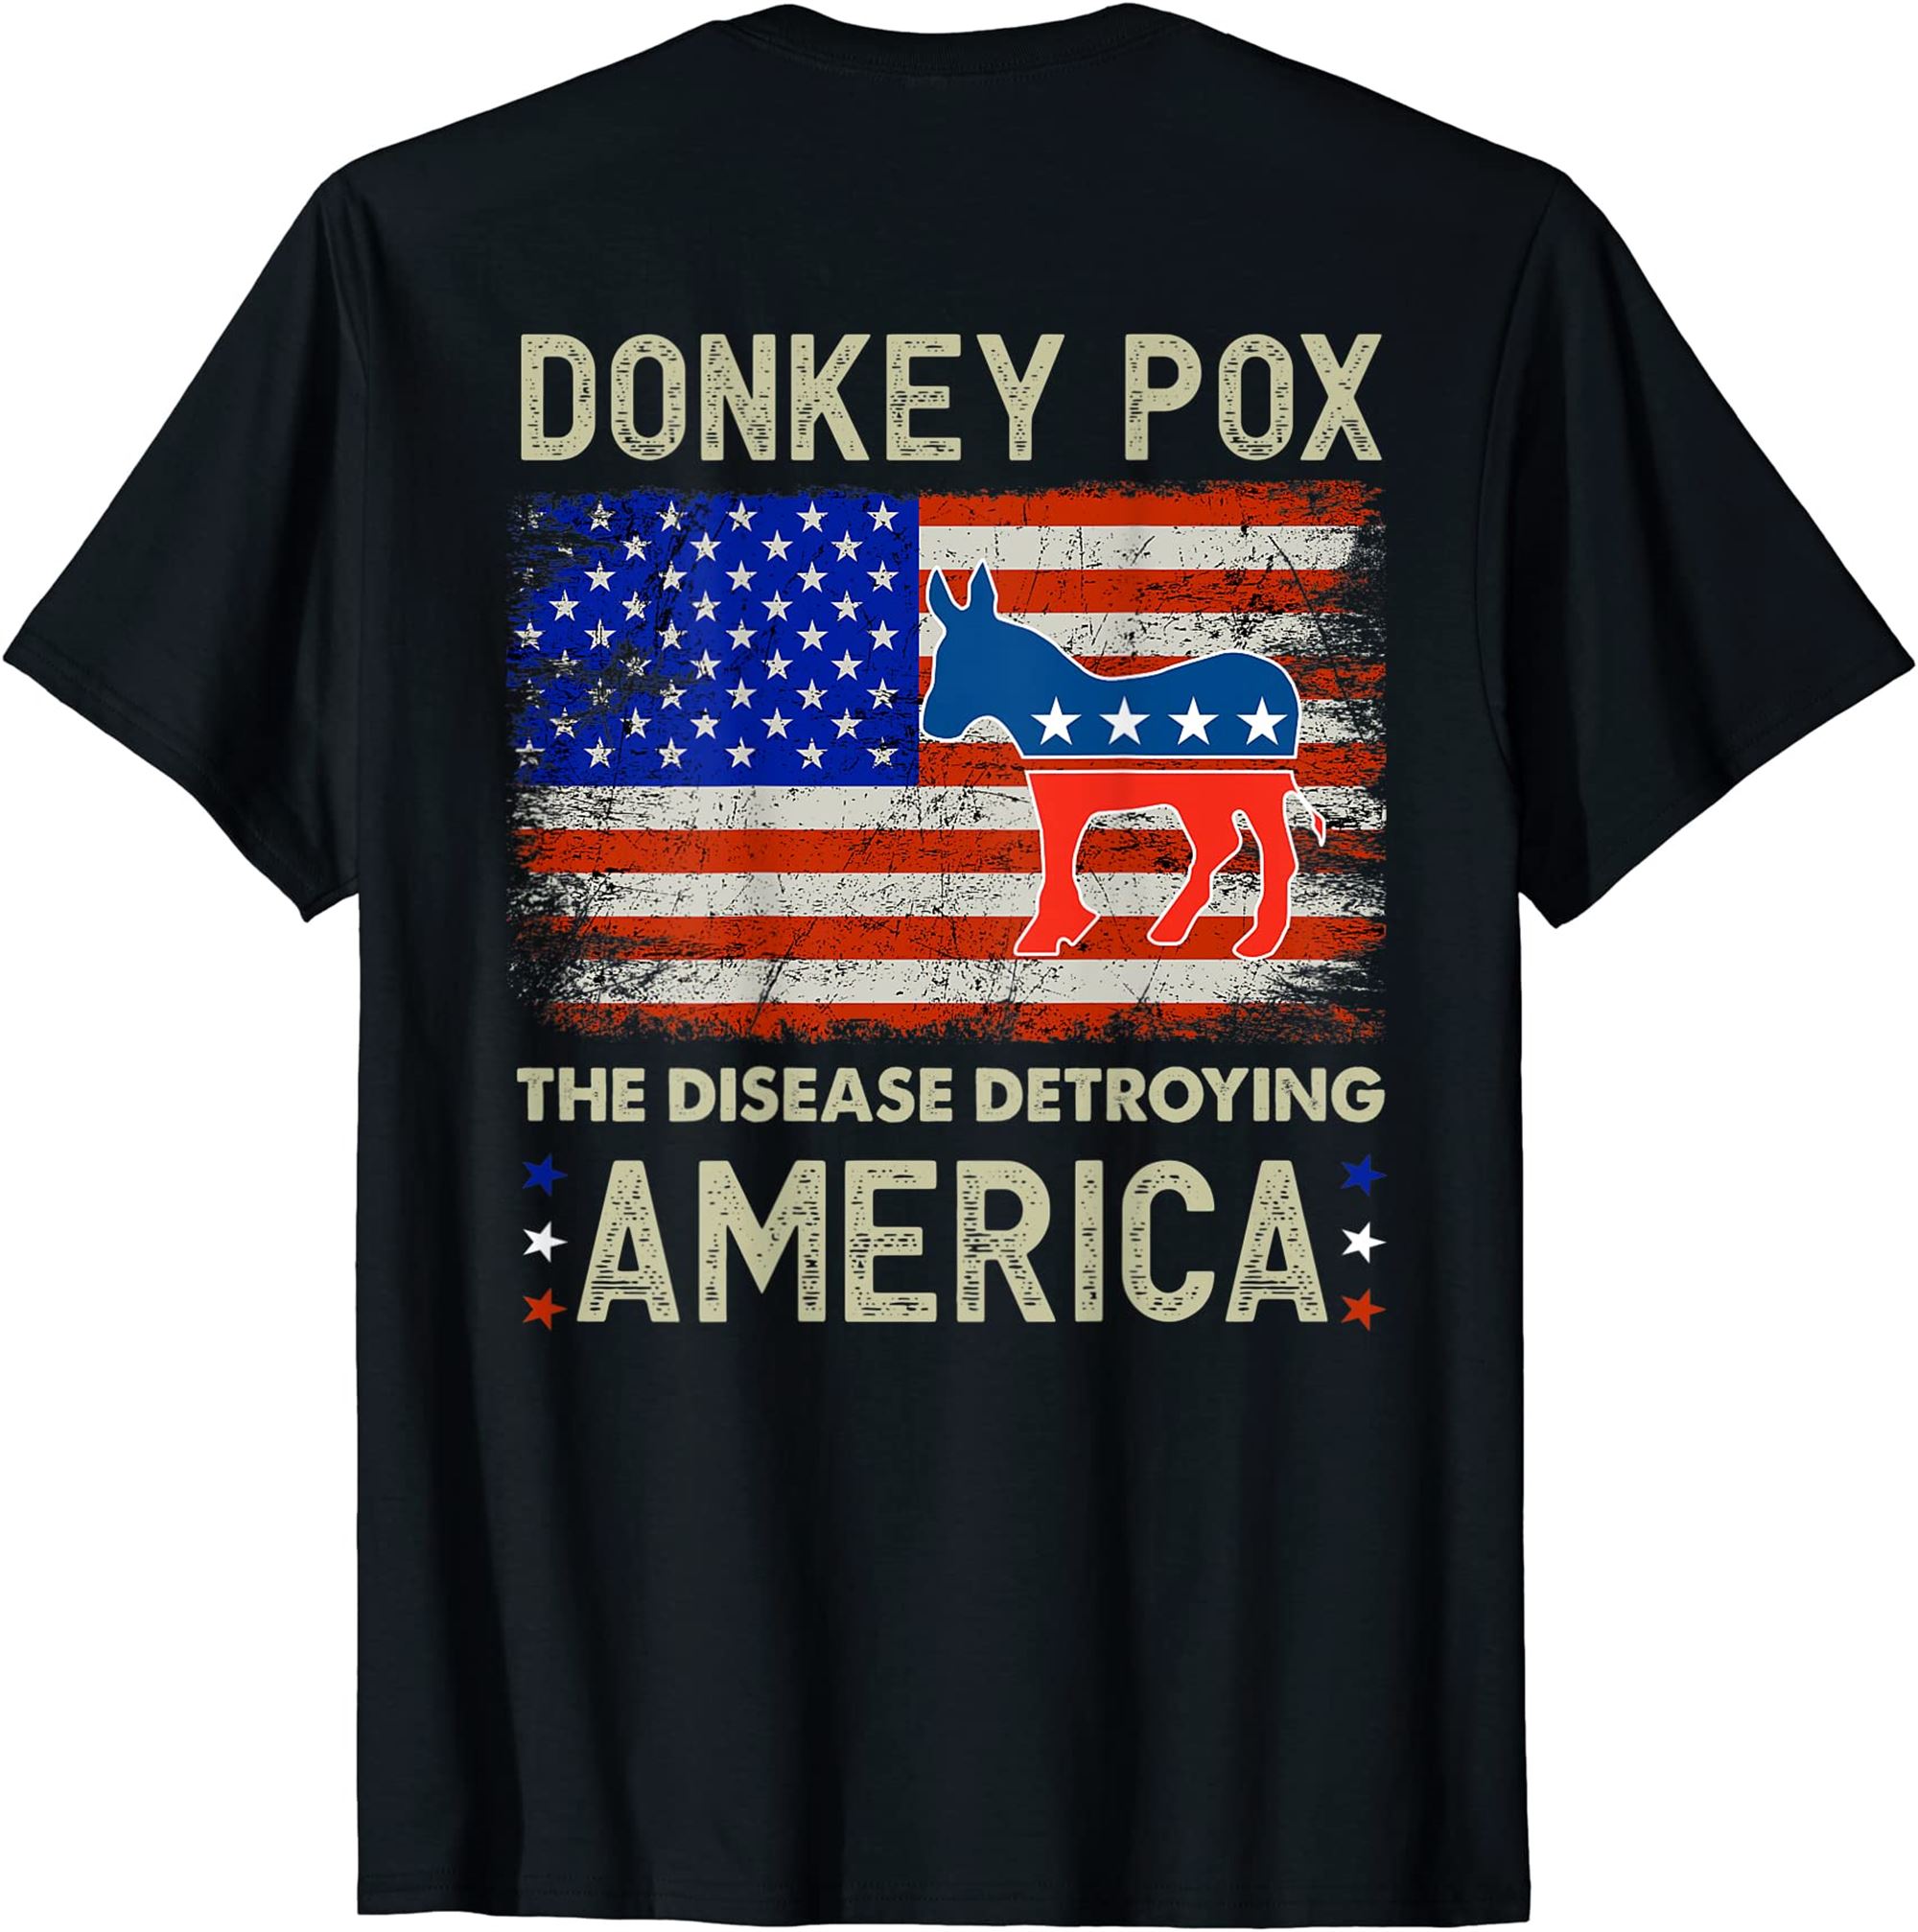 Donkey Pox The Disease Destroying America Donkeypox Back T Shirt Plus Size Up To 5xl